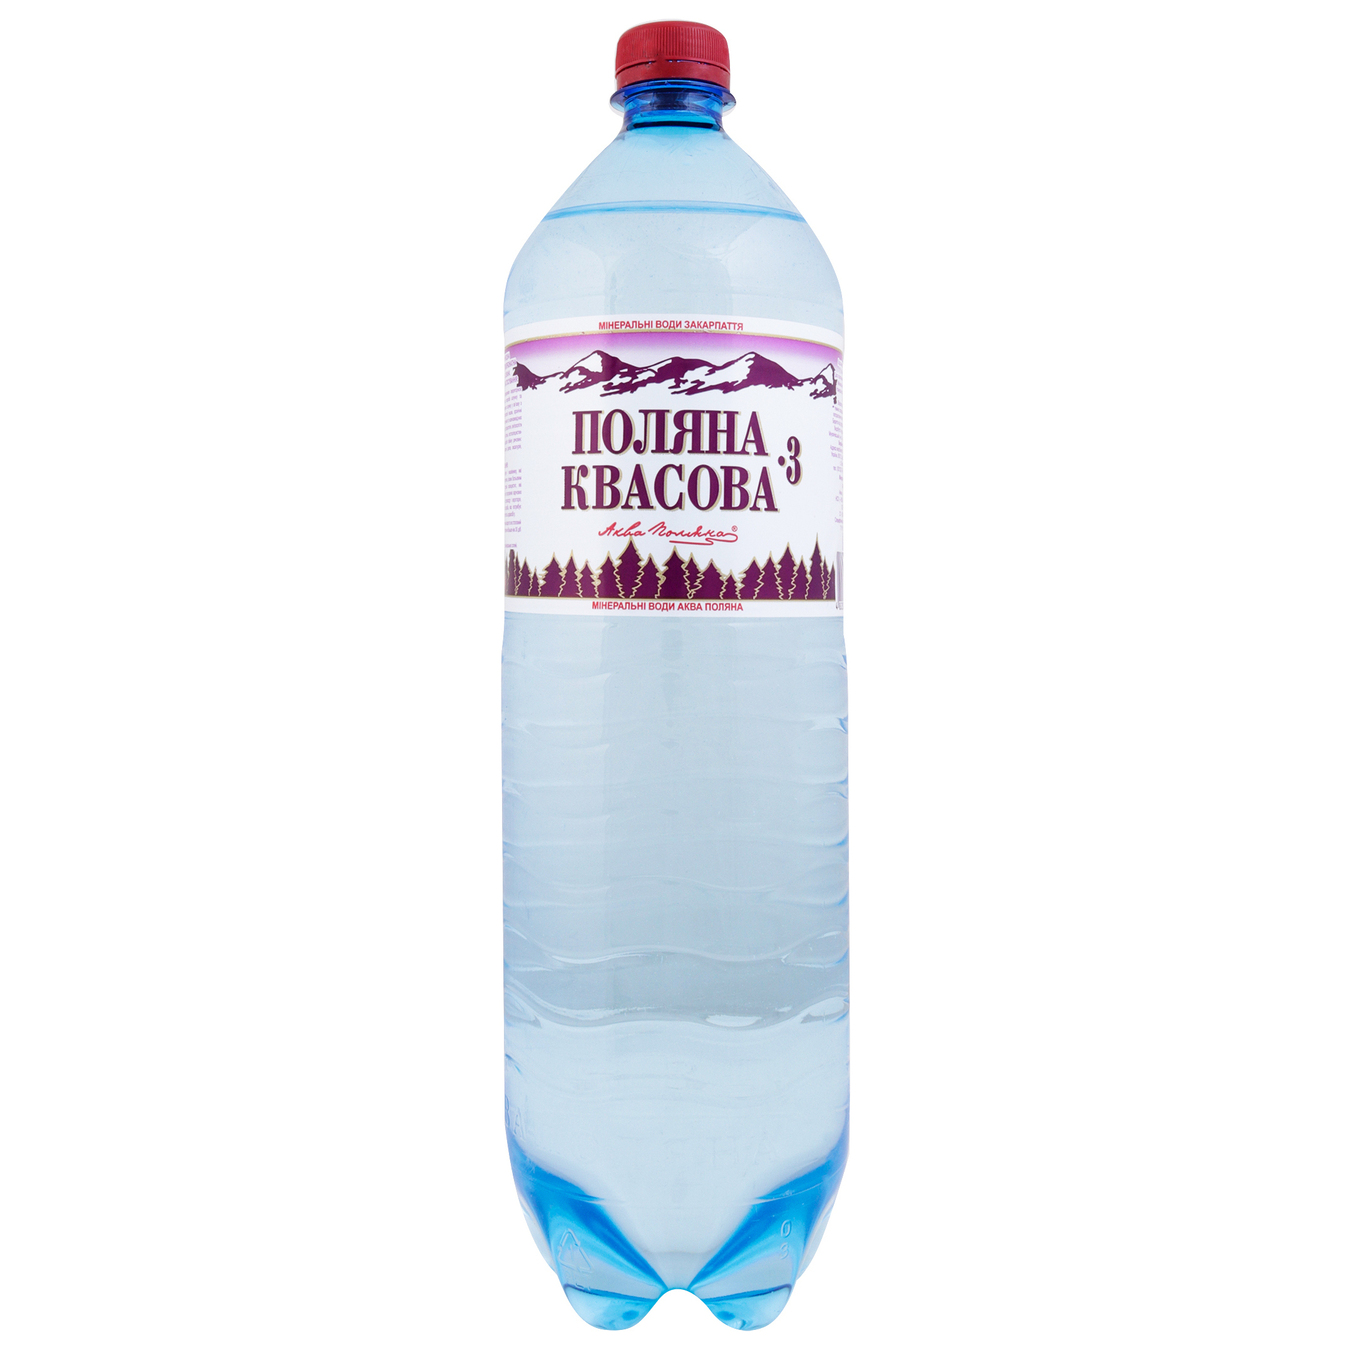 Polyana Kvasova  Highly carbonated mineral water  Aqua-Polyana p/house 44682 l  